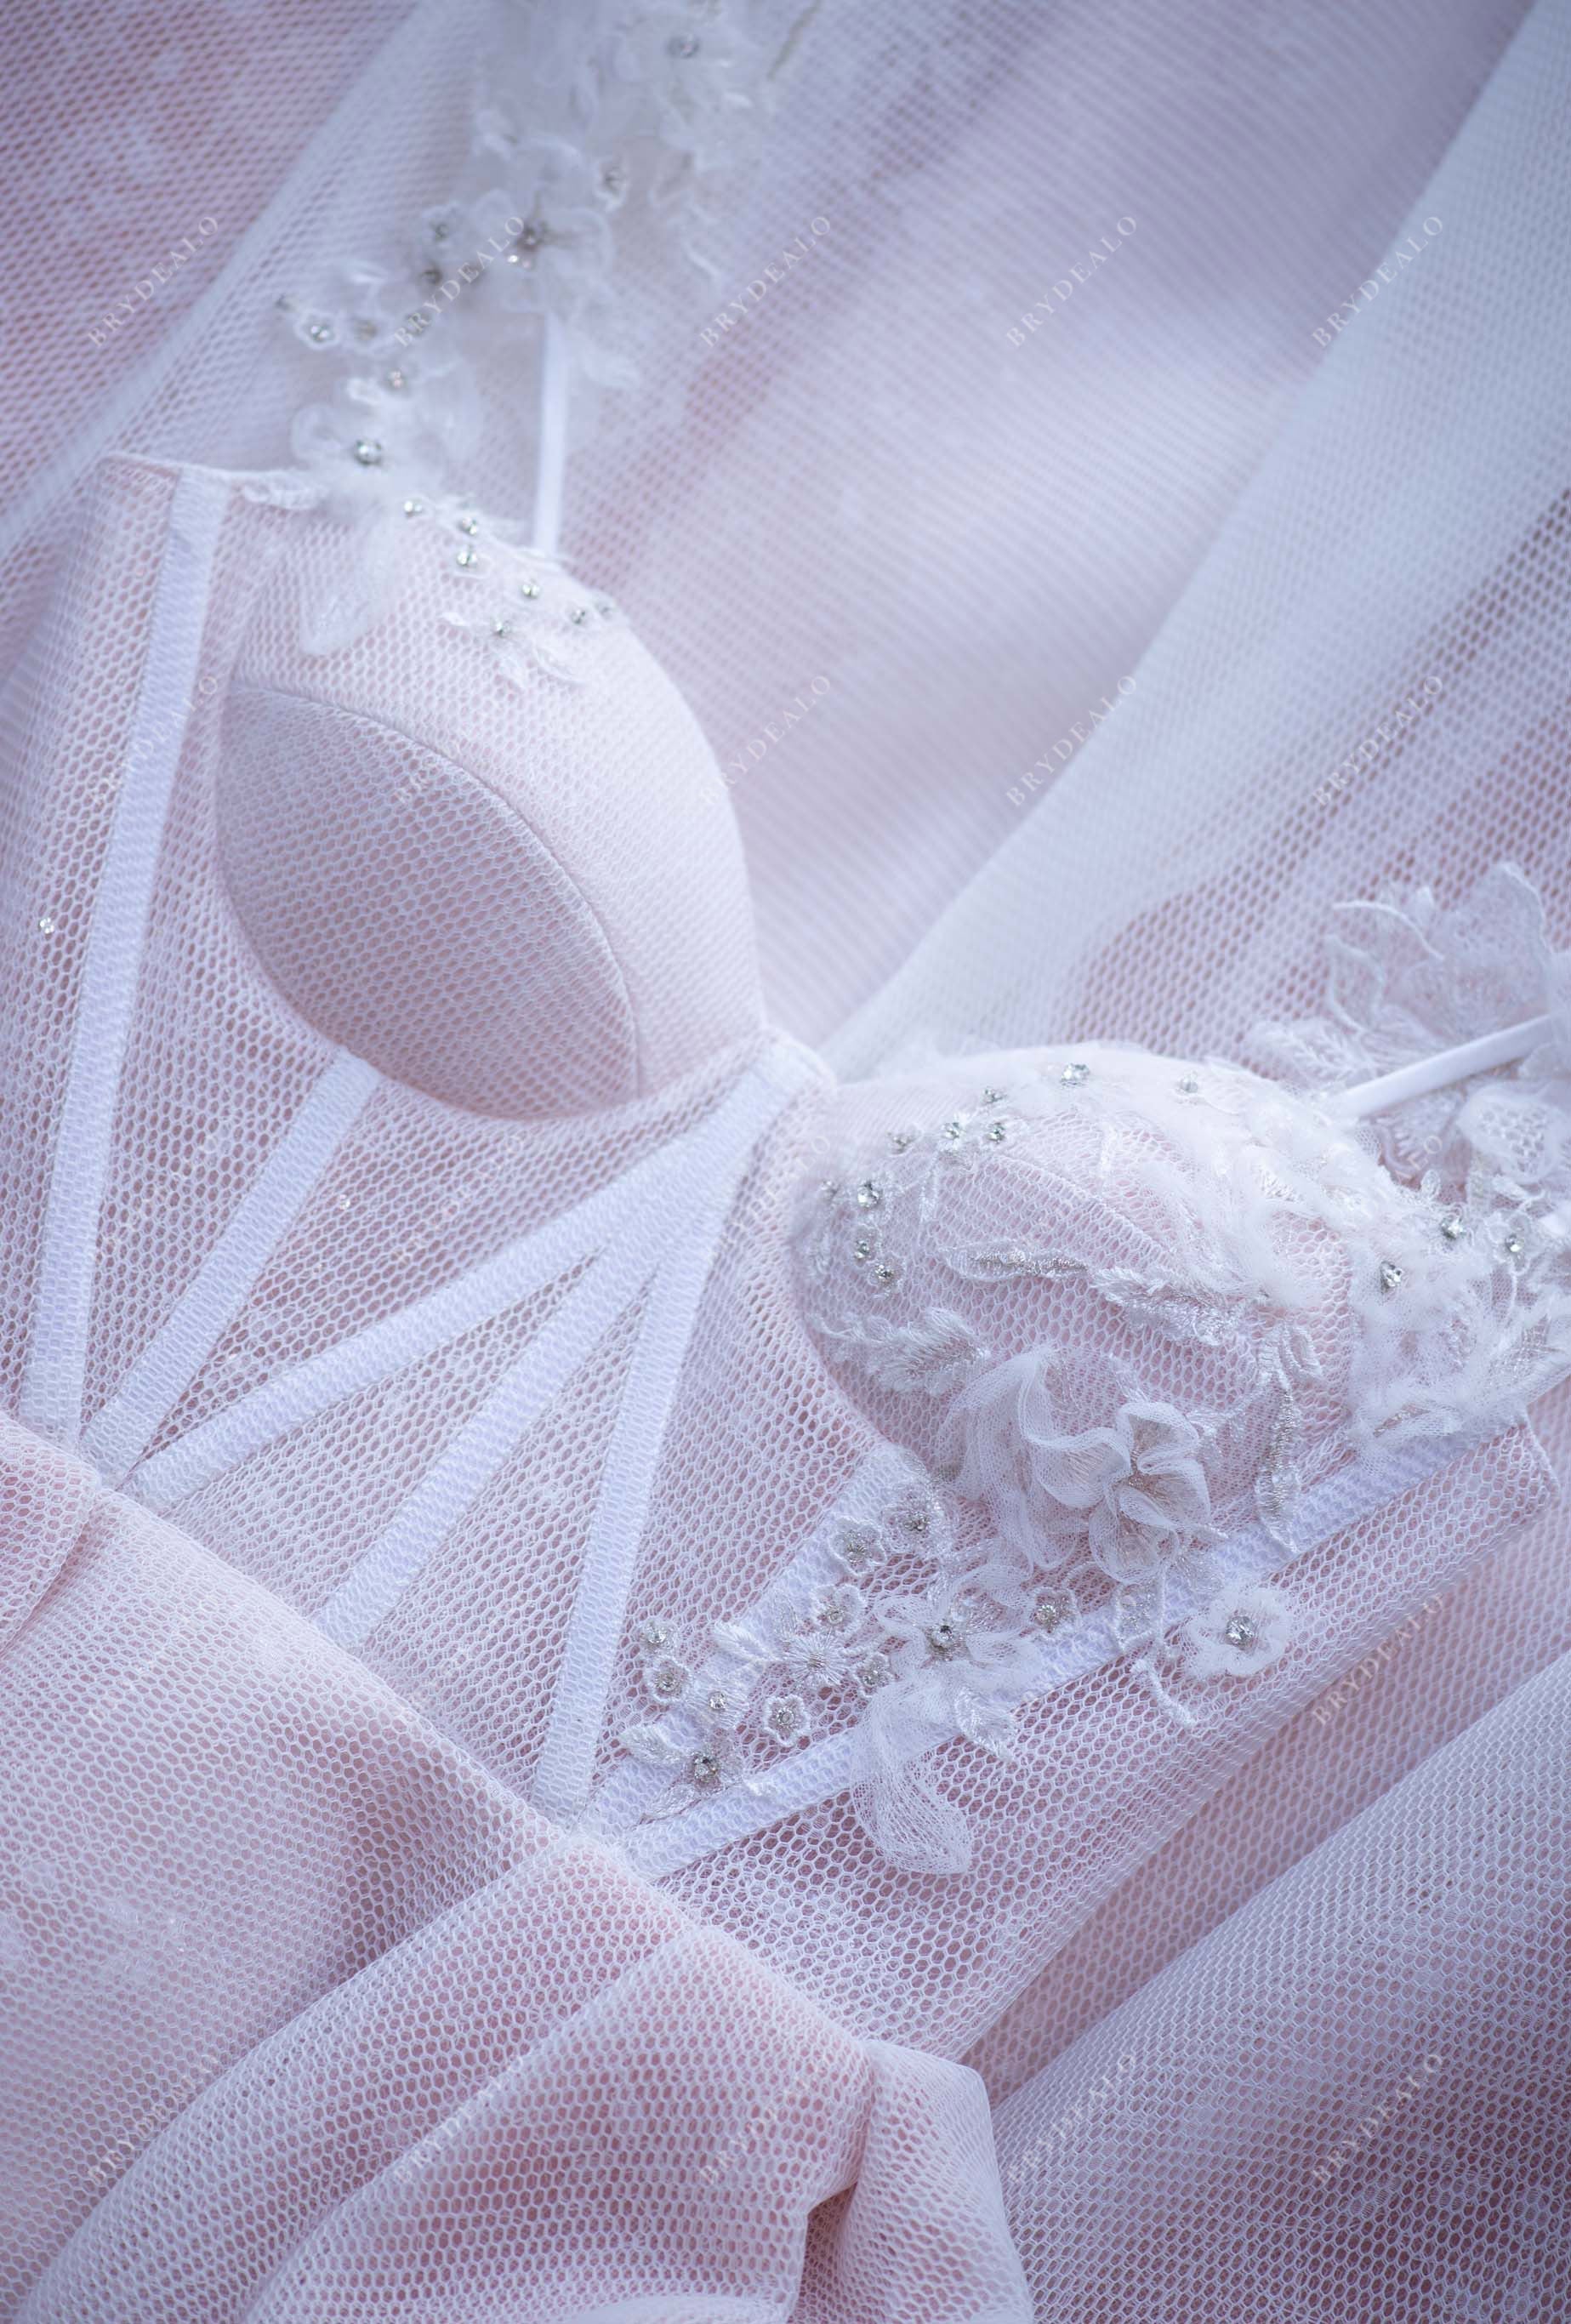 Designer Sweetheart Pinkish Corset Bridal Gown